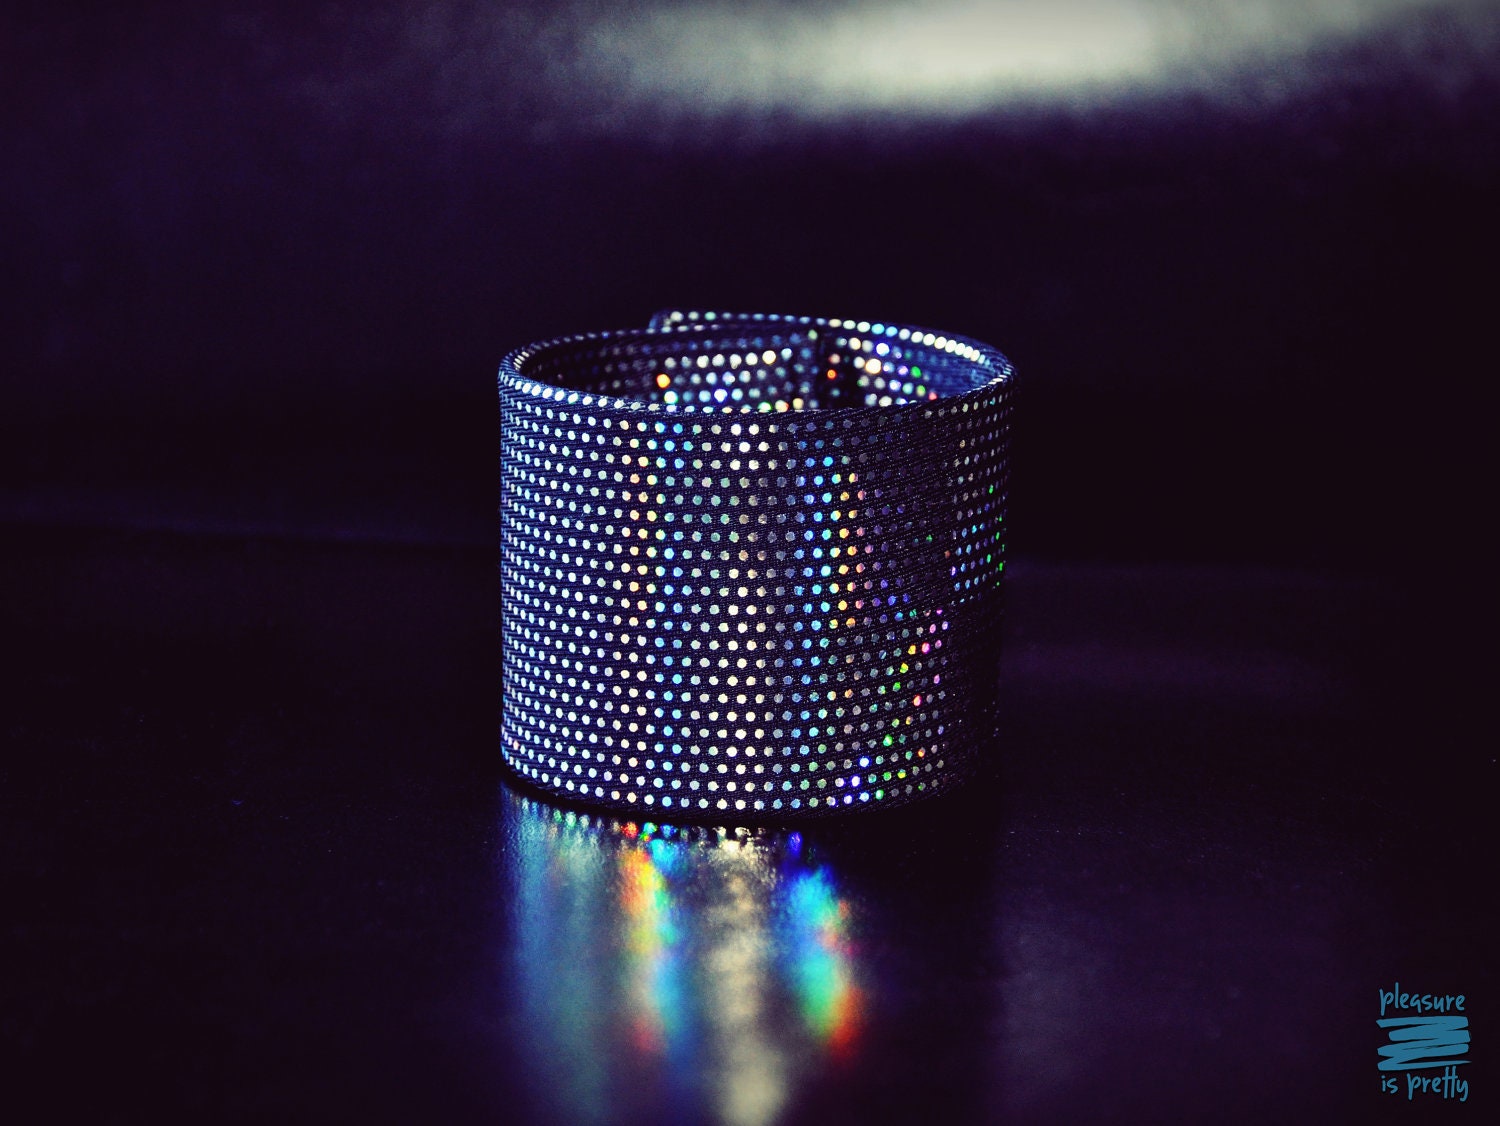 Unique holographic bracelet - pleasureispretty